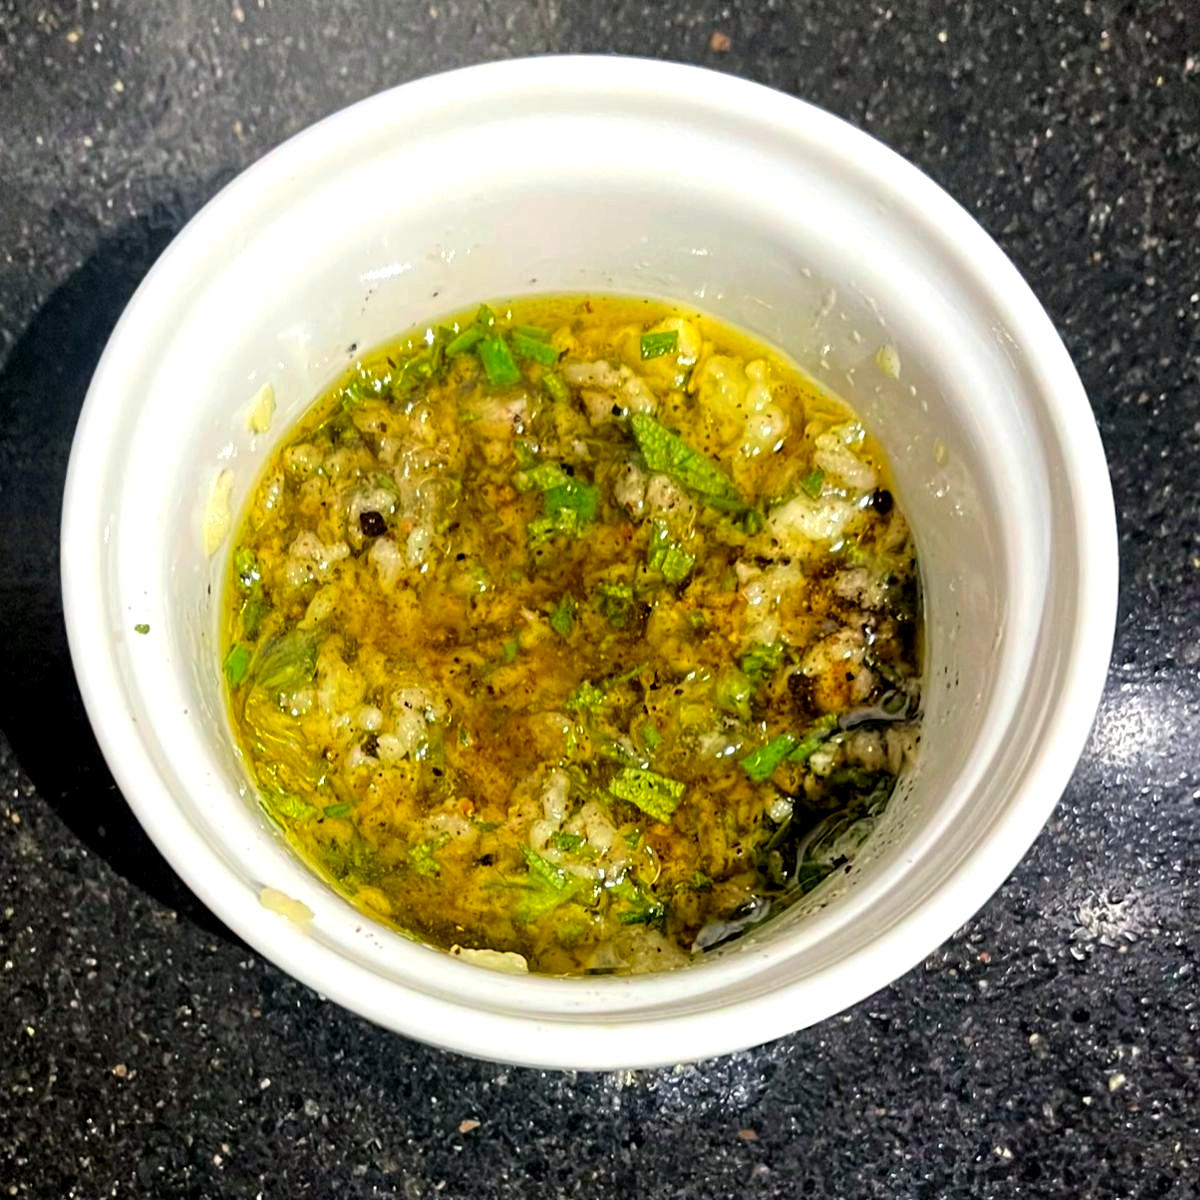 Olive oil with ground black pepper, salt, rosemary and garlic in white ramekin bowl.